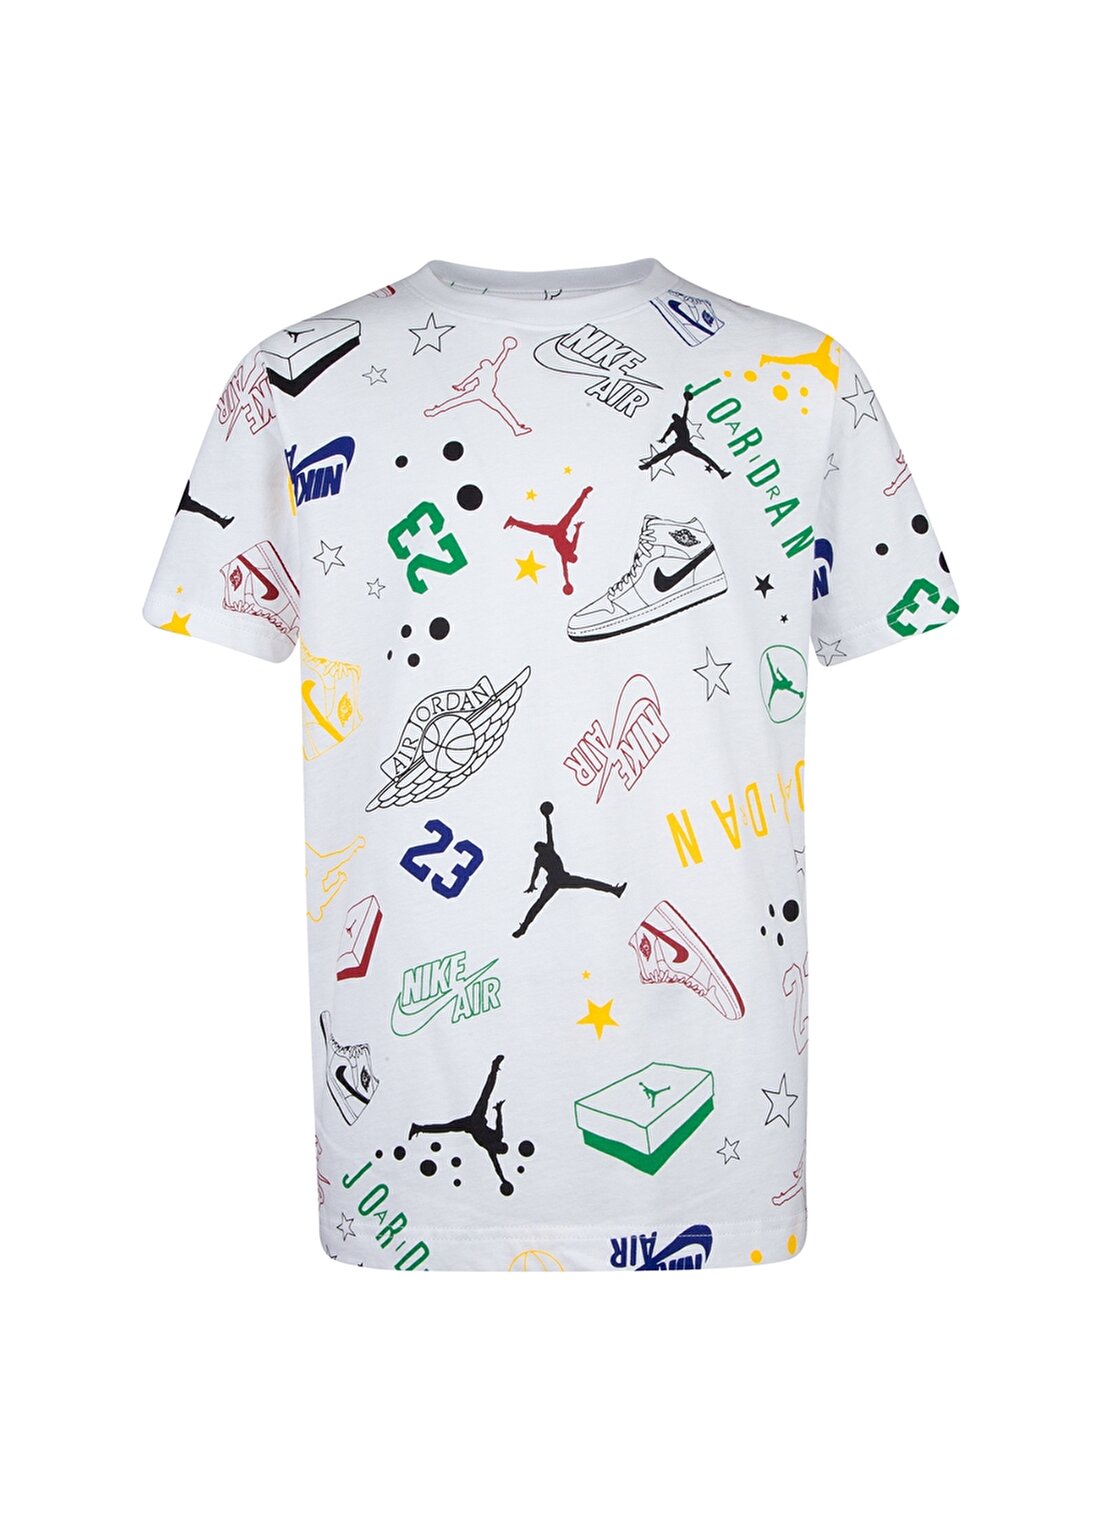 Nike 95A075-001 Air Jordan Allstar Scribble T-Shirt